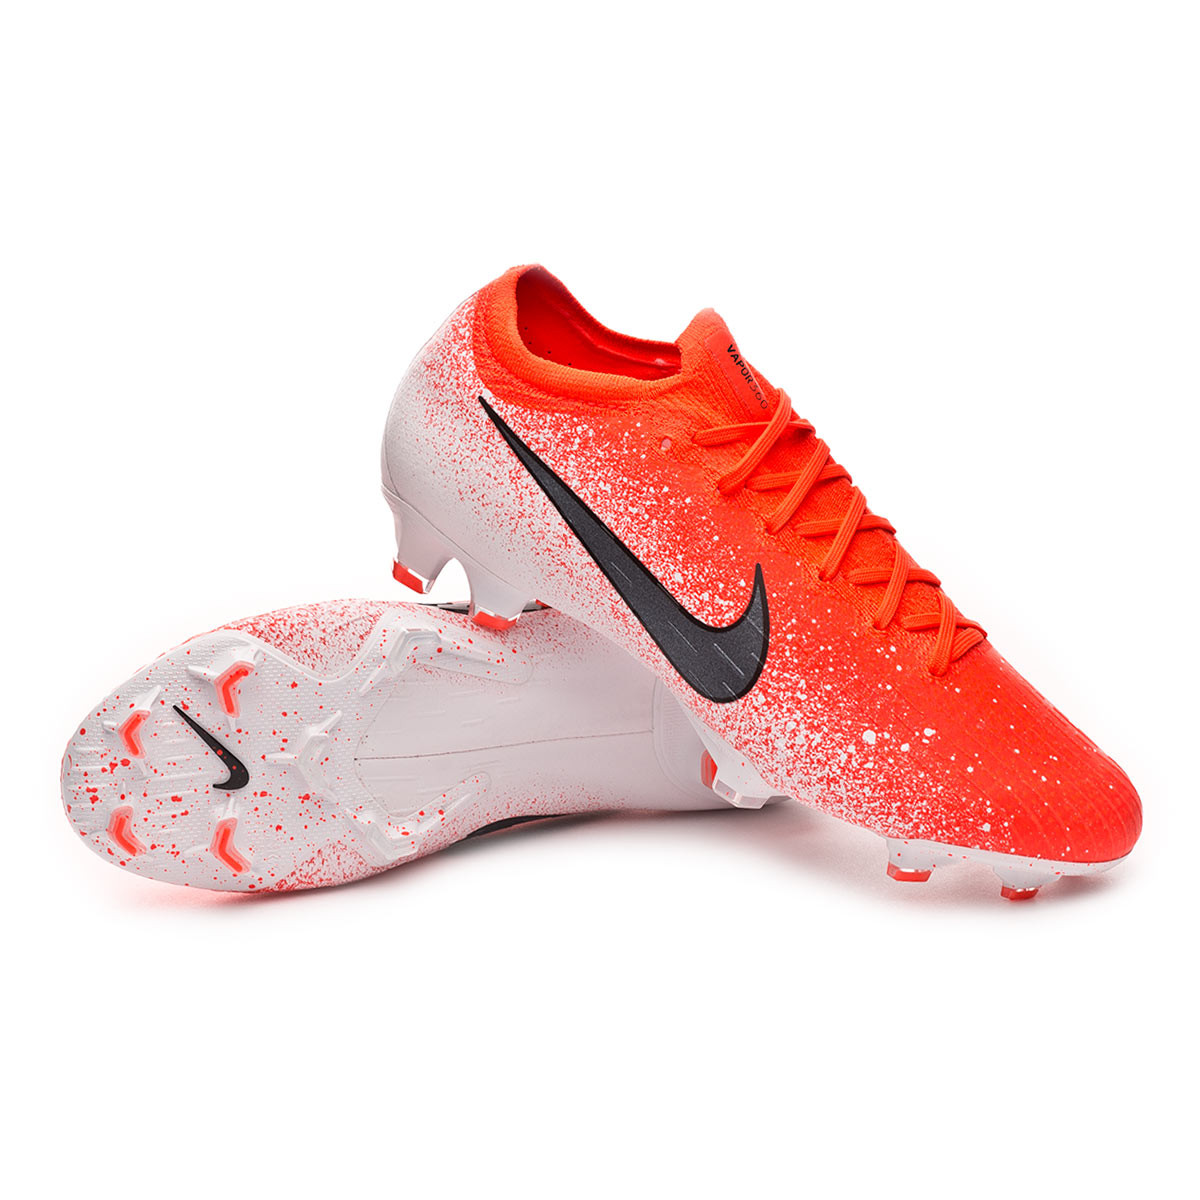 Football Boots Nike Mercurial Vapor XII Elite FG Hyper crimson-Black-White  - Football store Fútbol Emotion